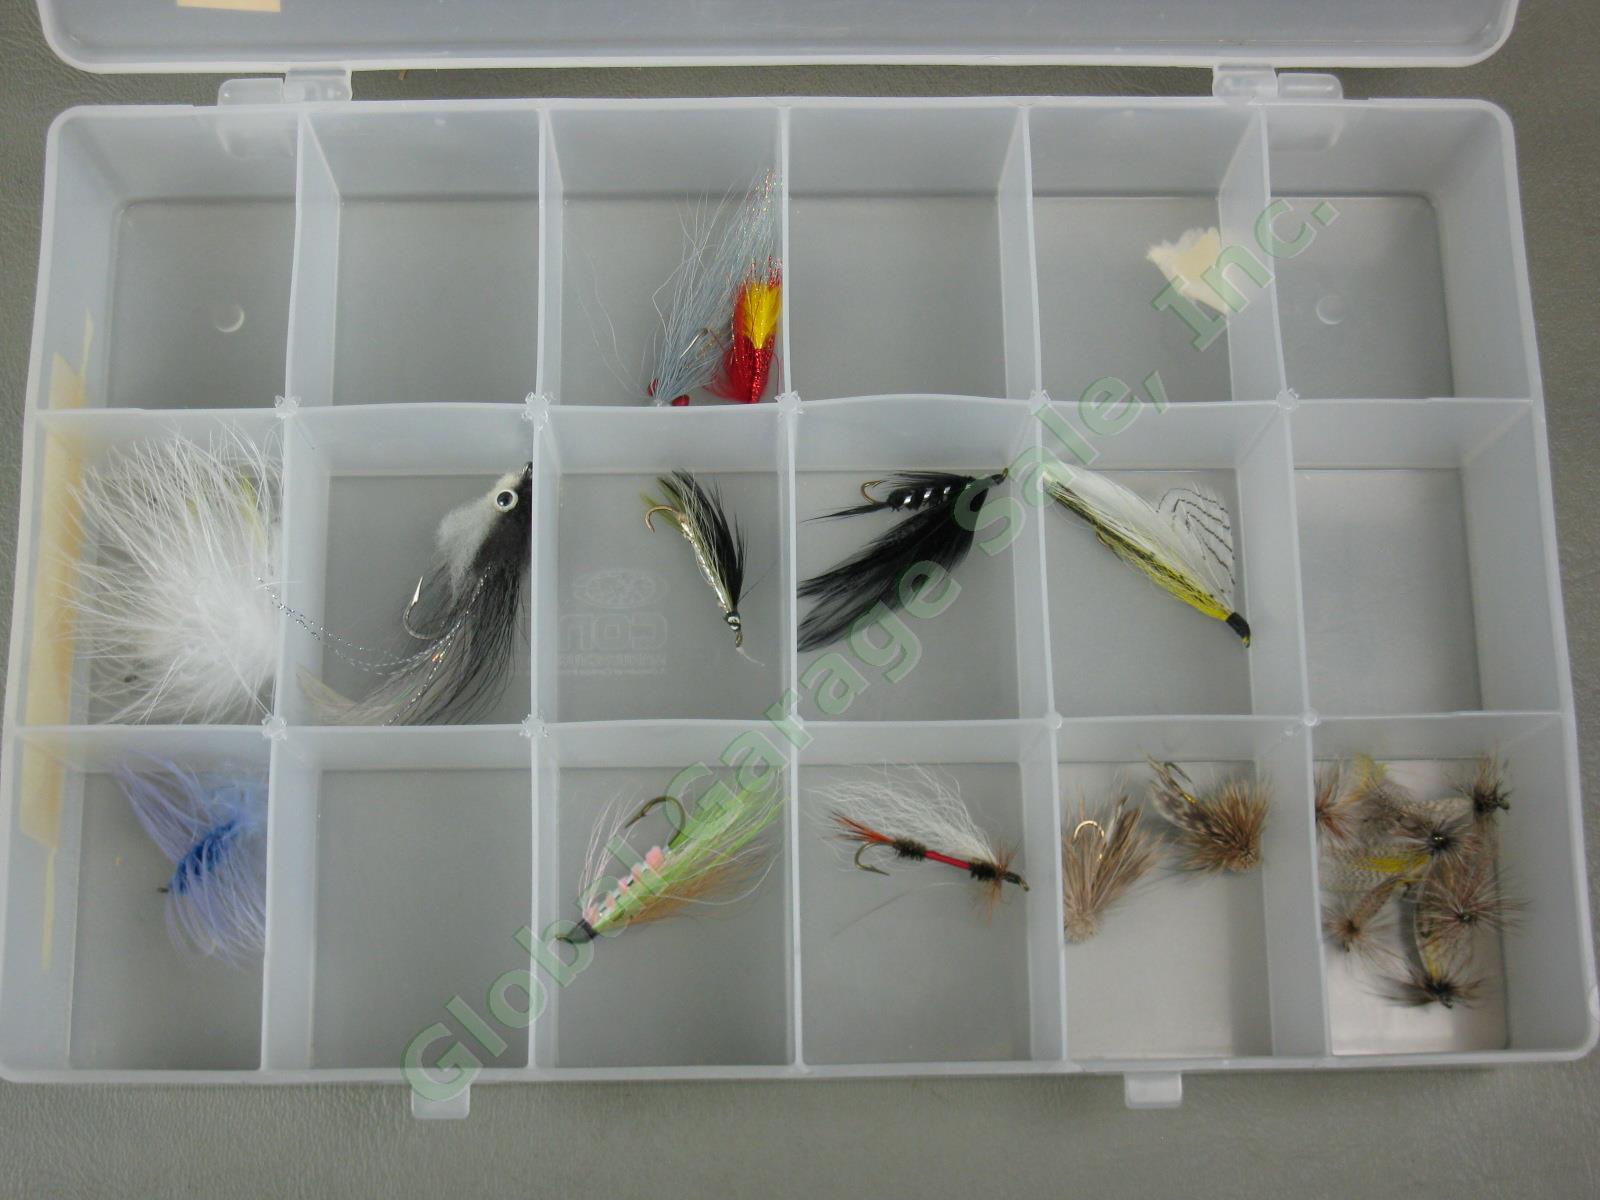 HUGE Lot 700+/- Fly Fishing Flies Trout Wet Dry Caddis Nymph w/ Cabelas Bag NR! 14